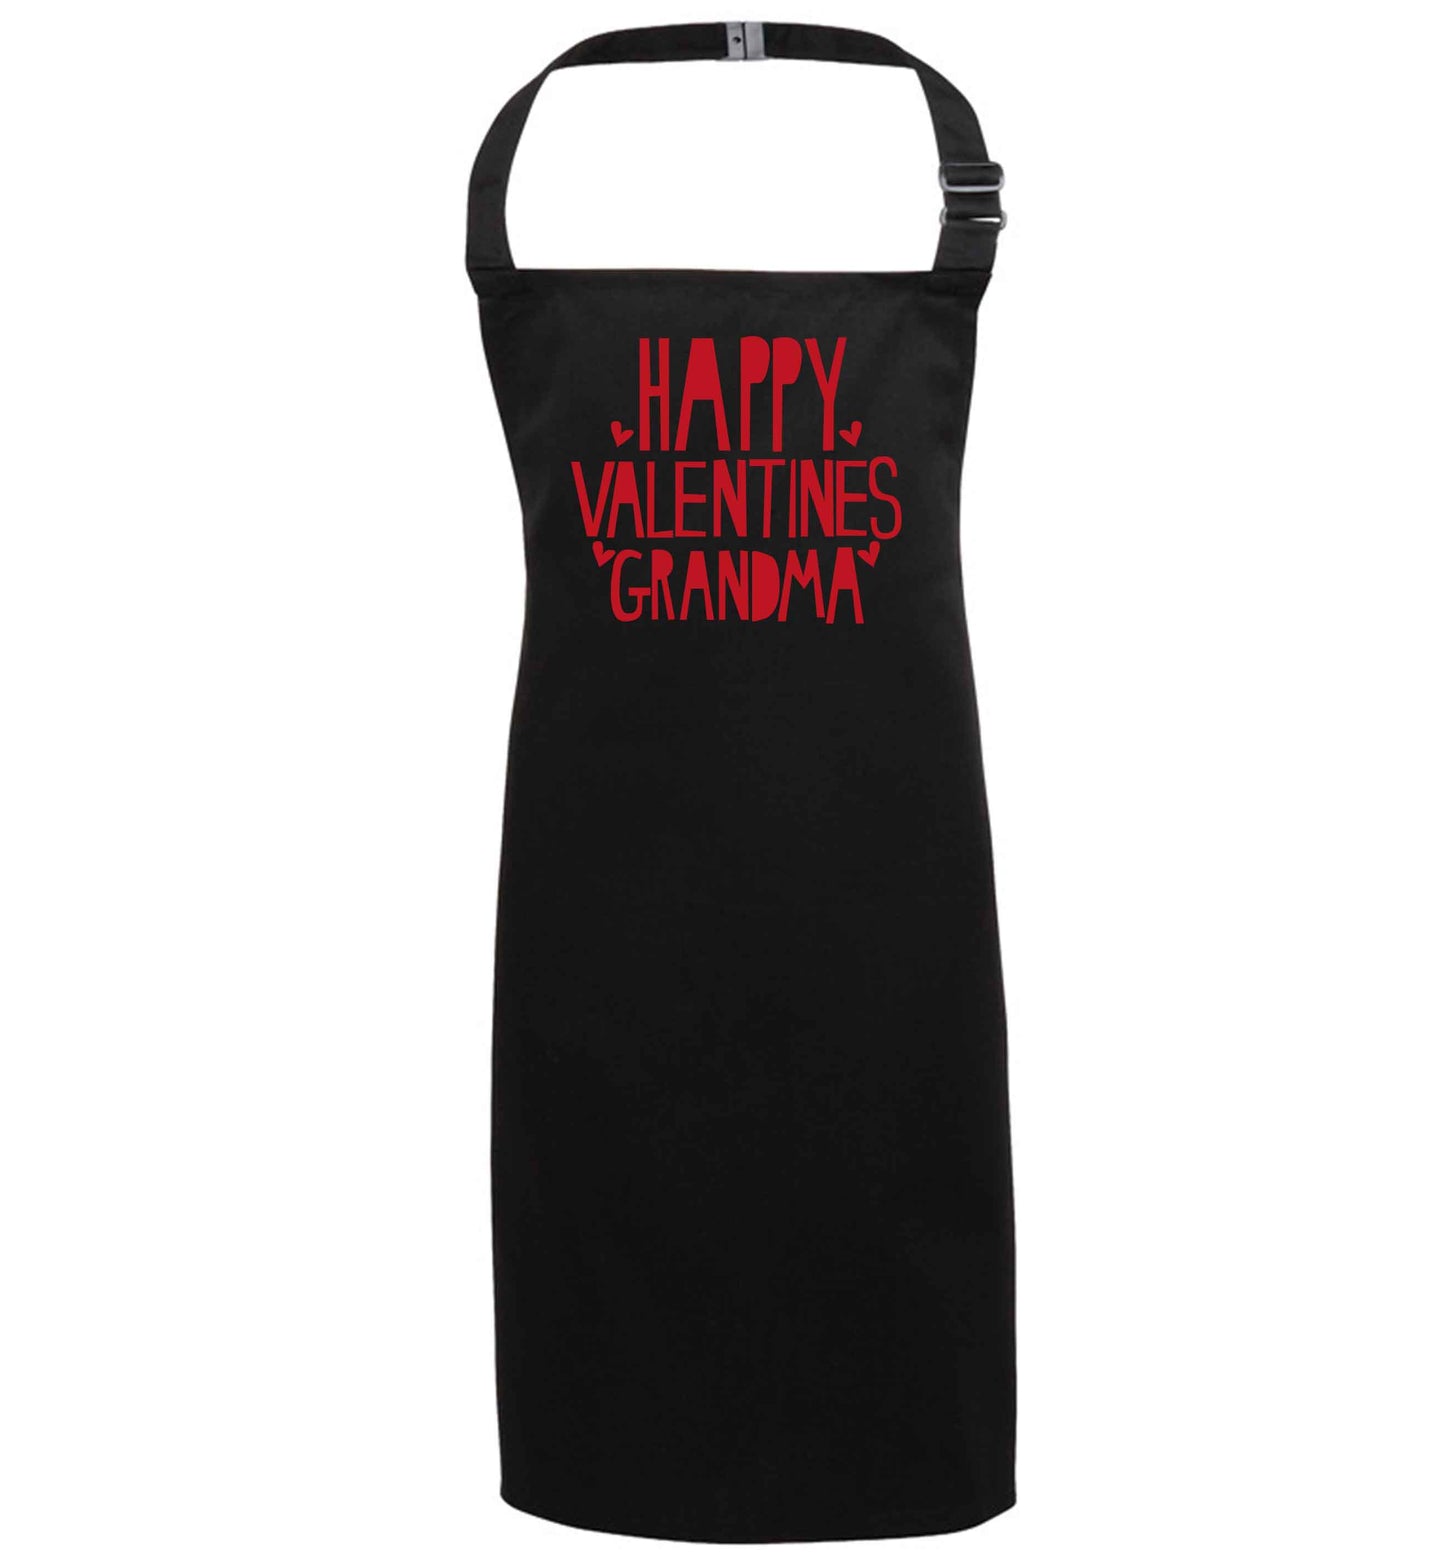 Happy valentines grandma black apron 7-10 years